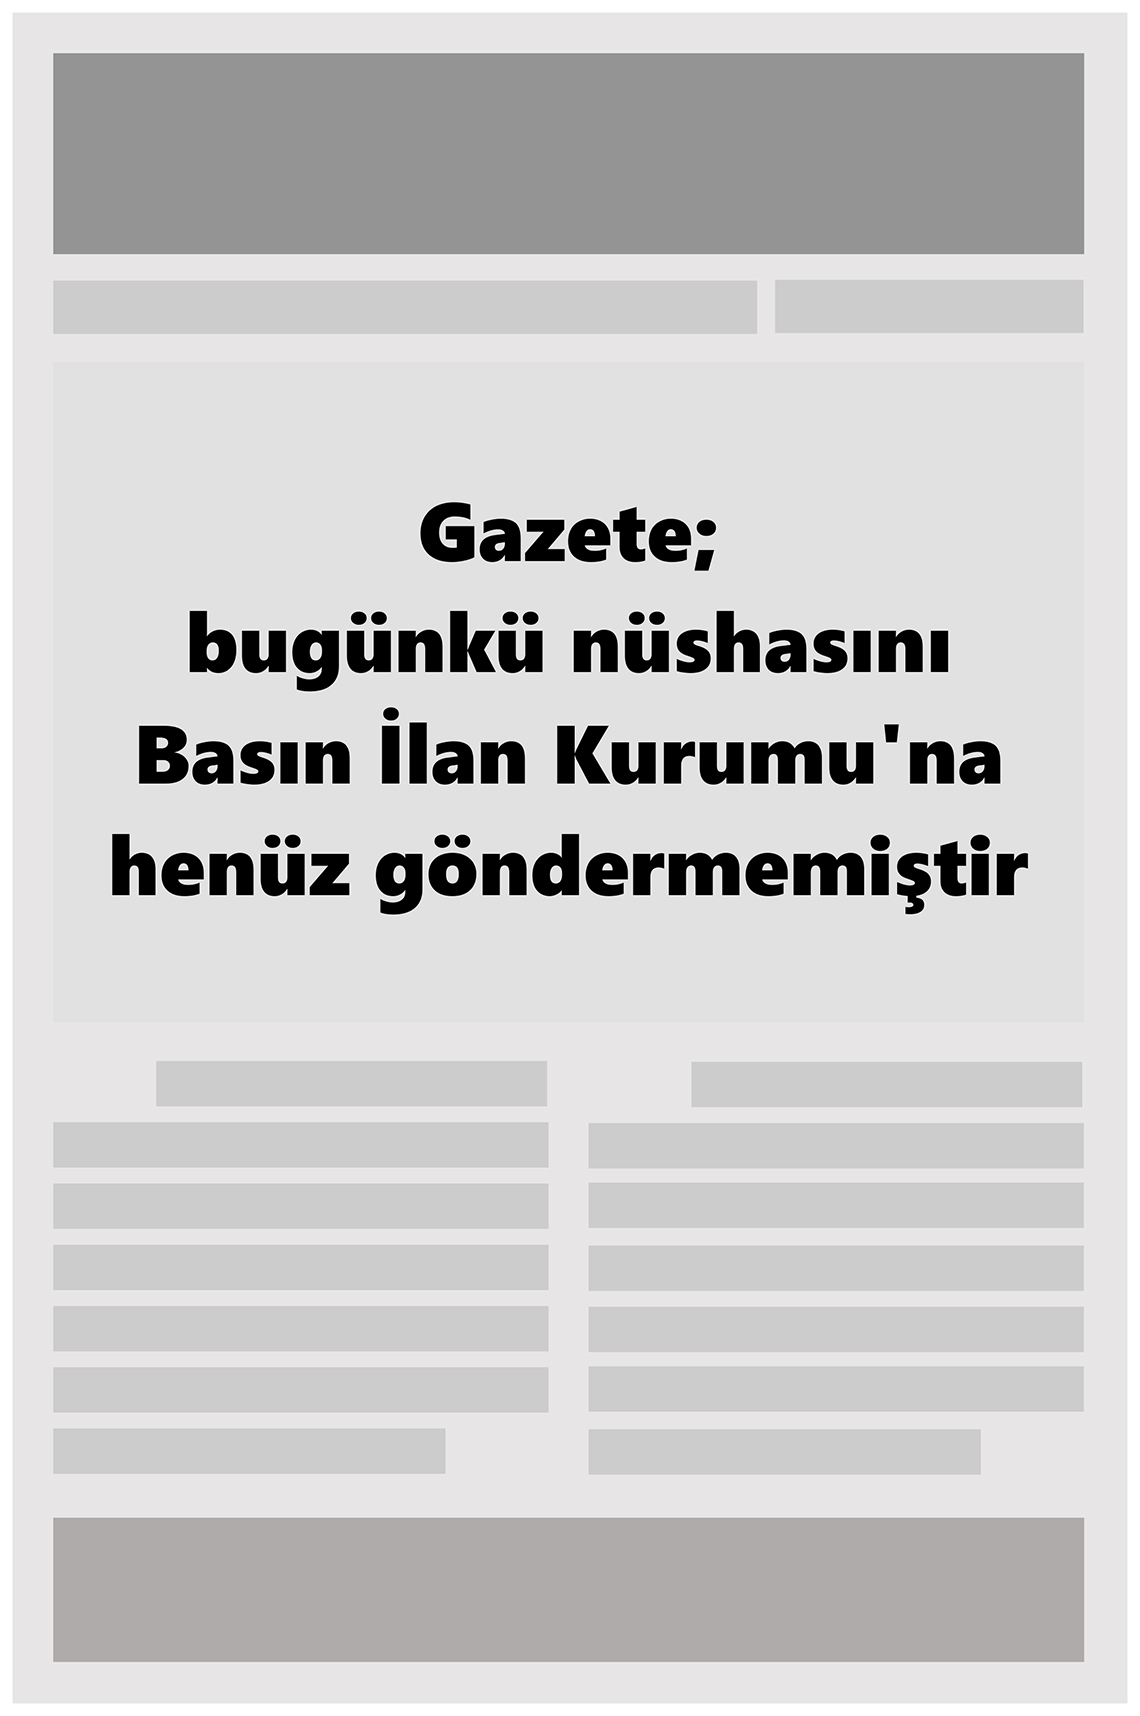 16 Ocak 2022 Öz Diyarbakir Gazete Gazete Manşeti